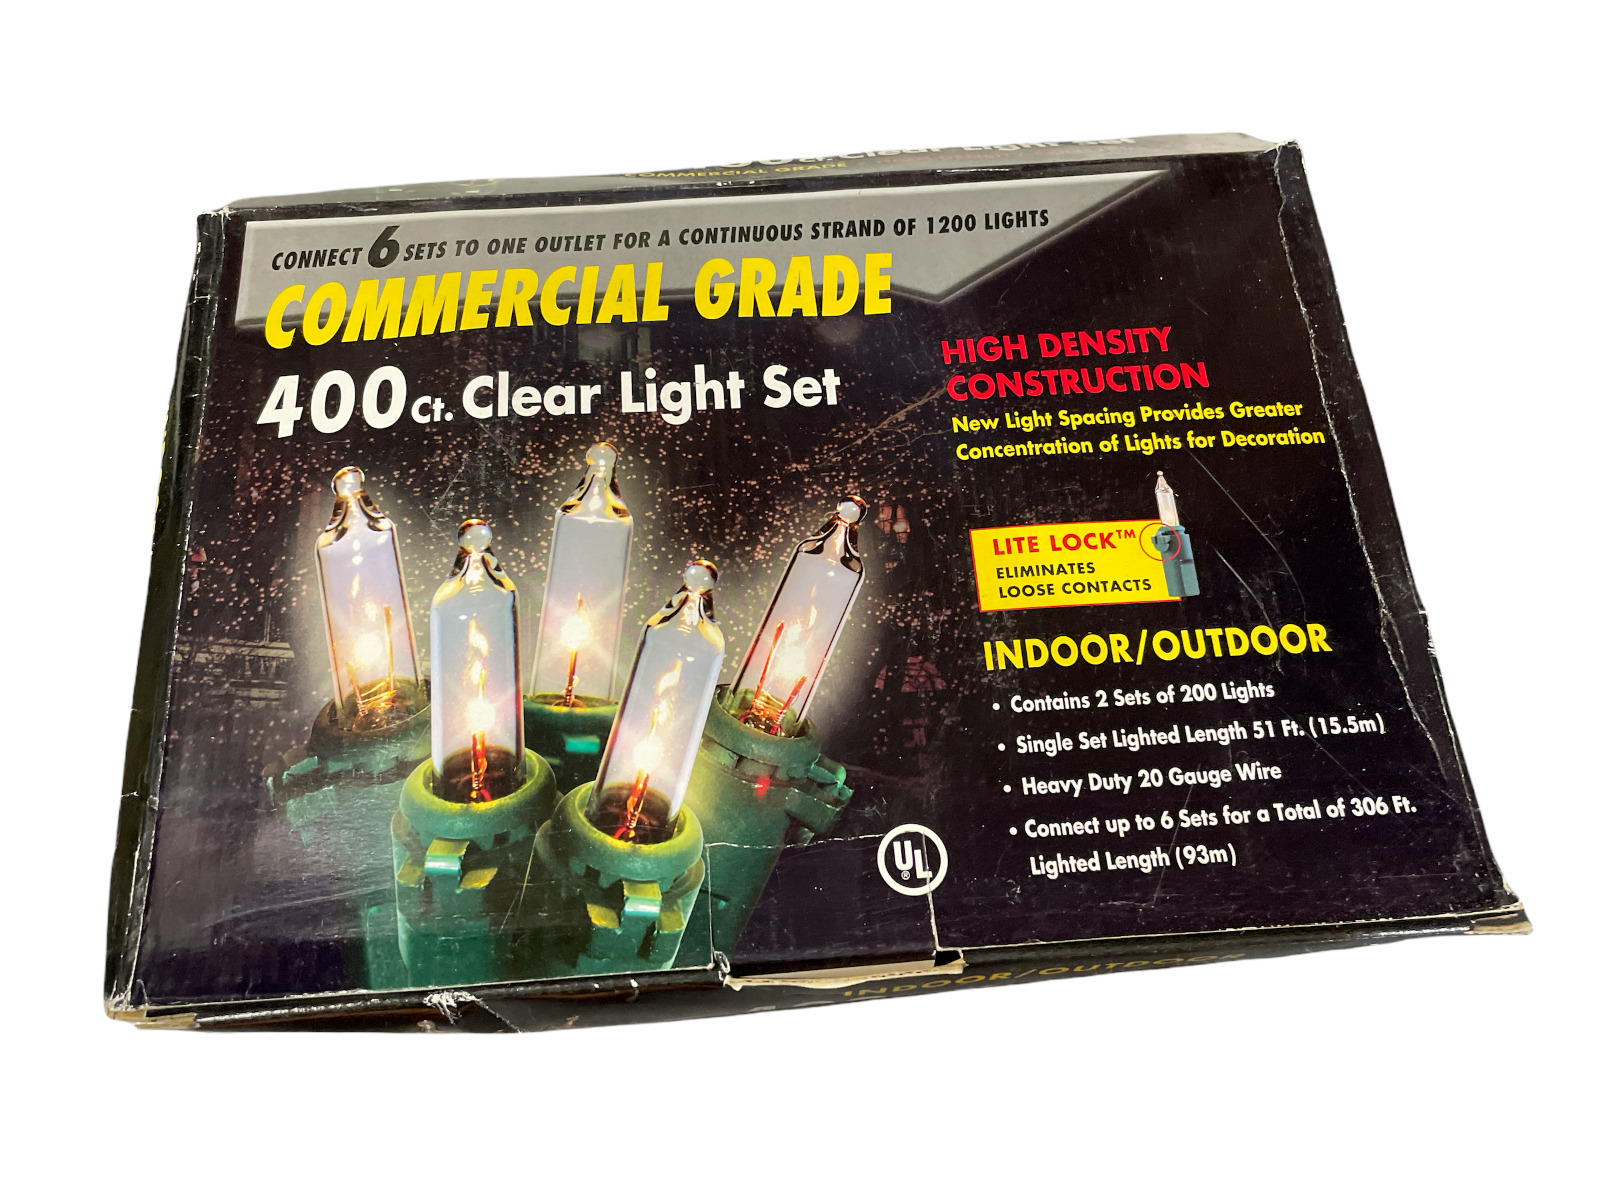 NOS Commercial Grade 400ct Clear Light set Indoor/Outdoor